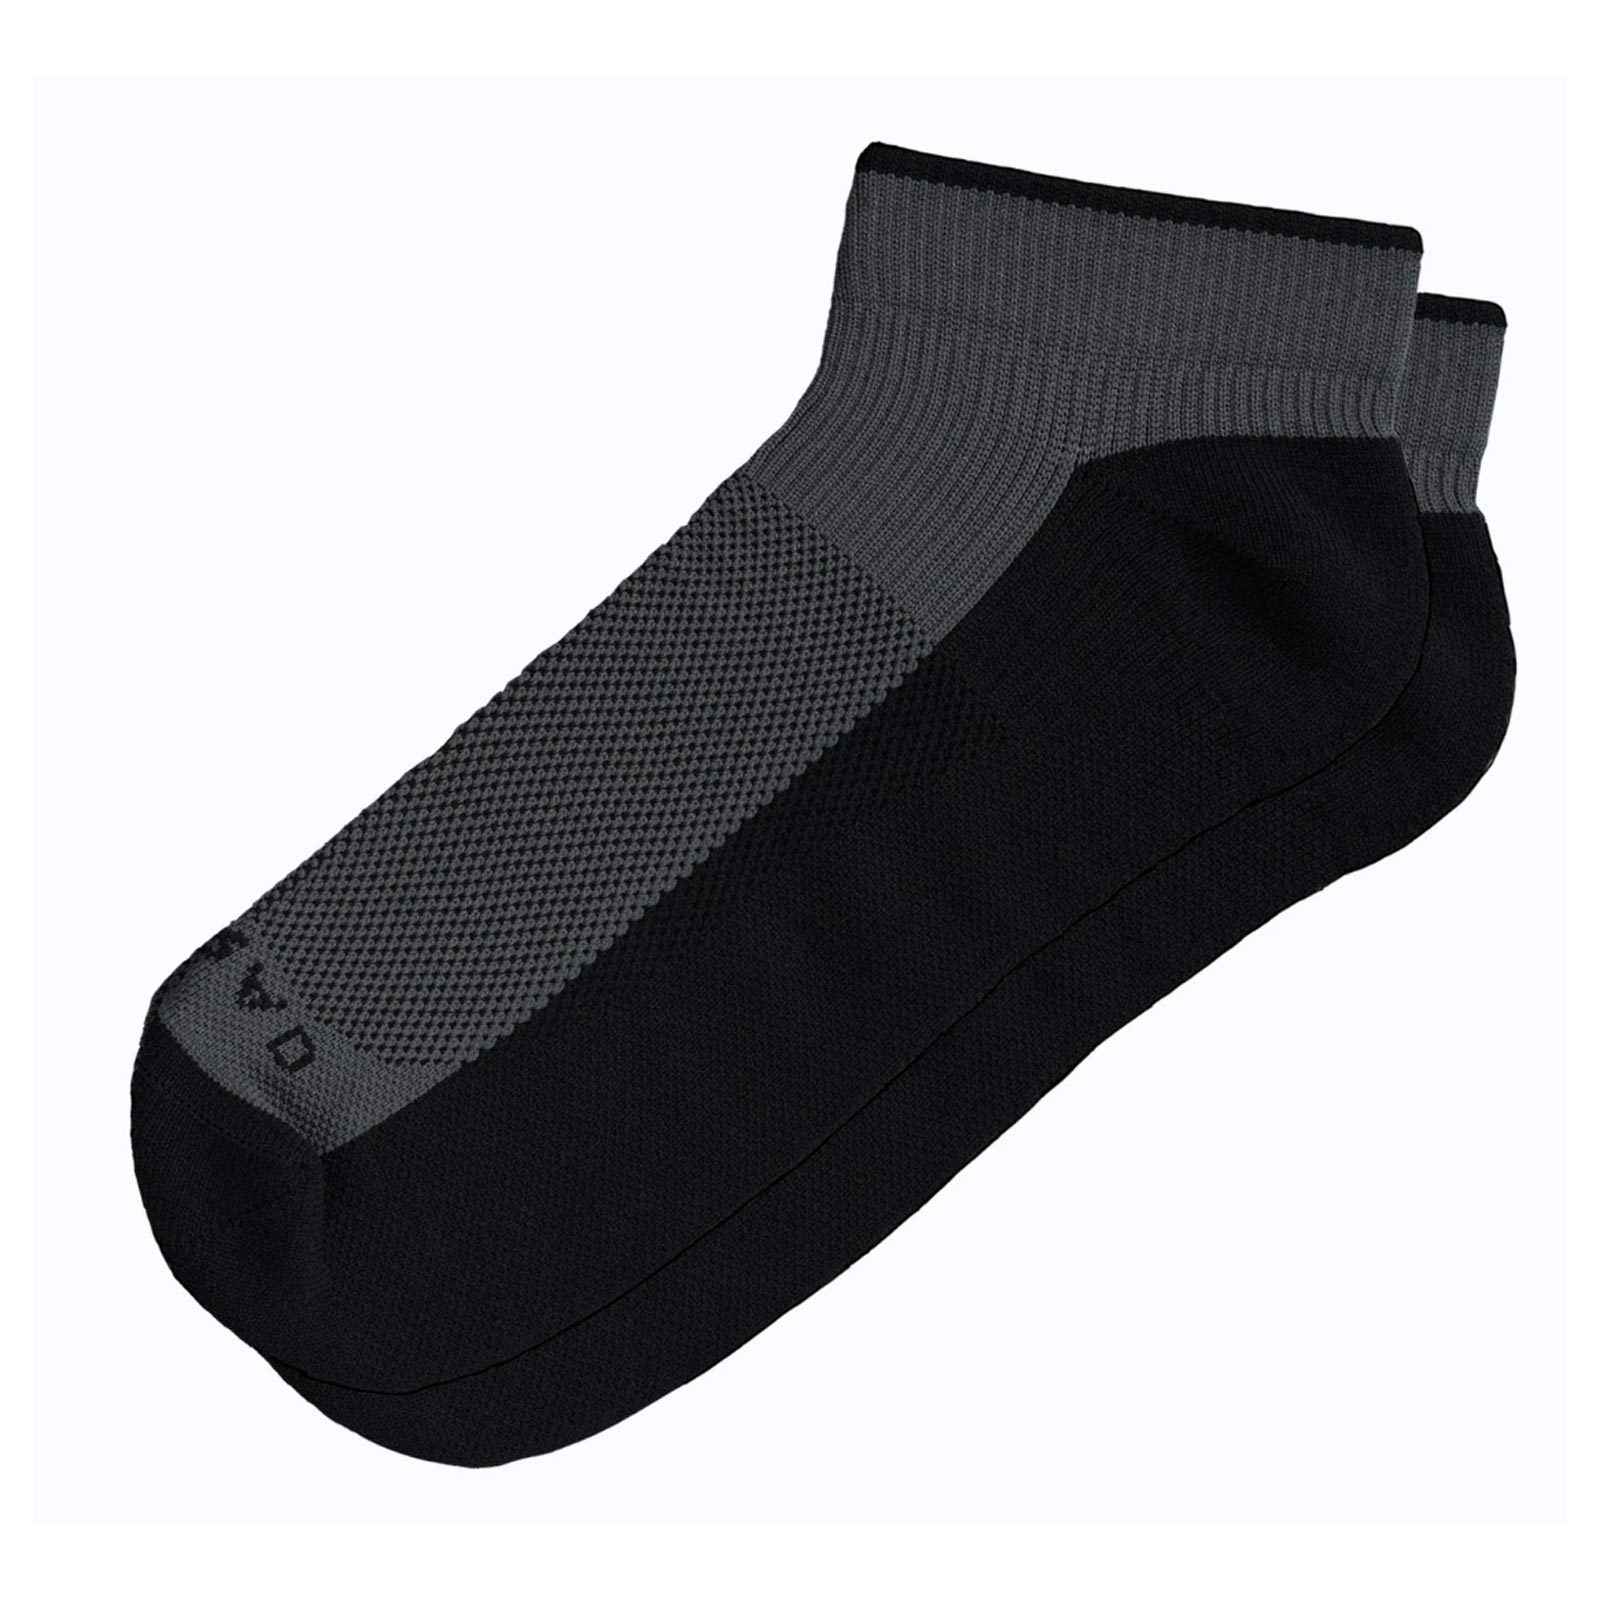 Comrad Ankle Compression Socks